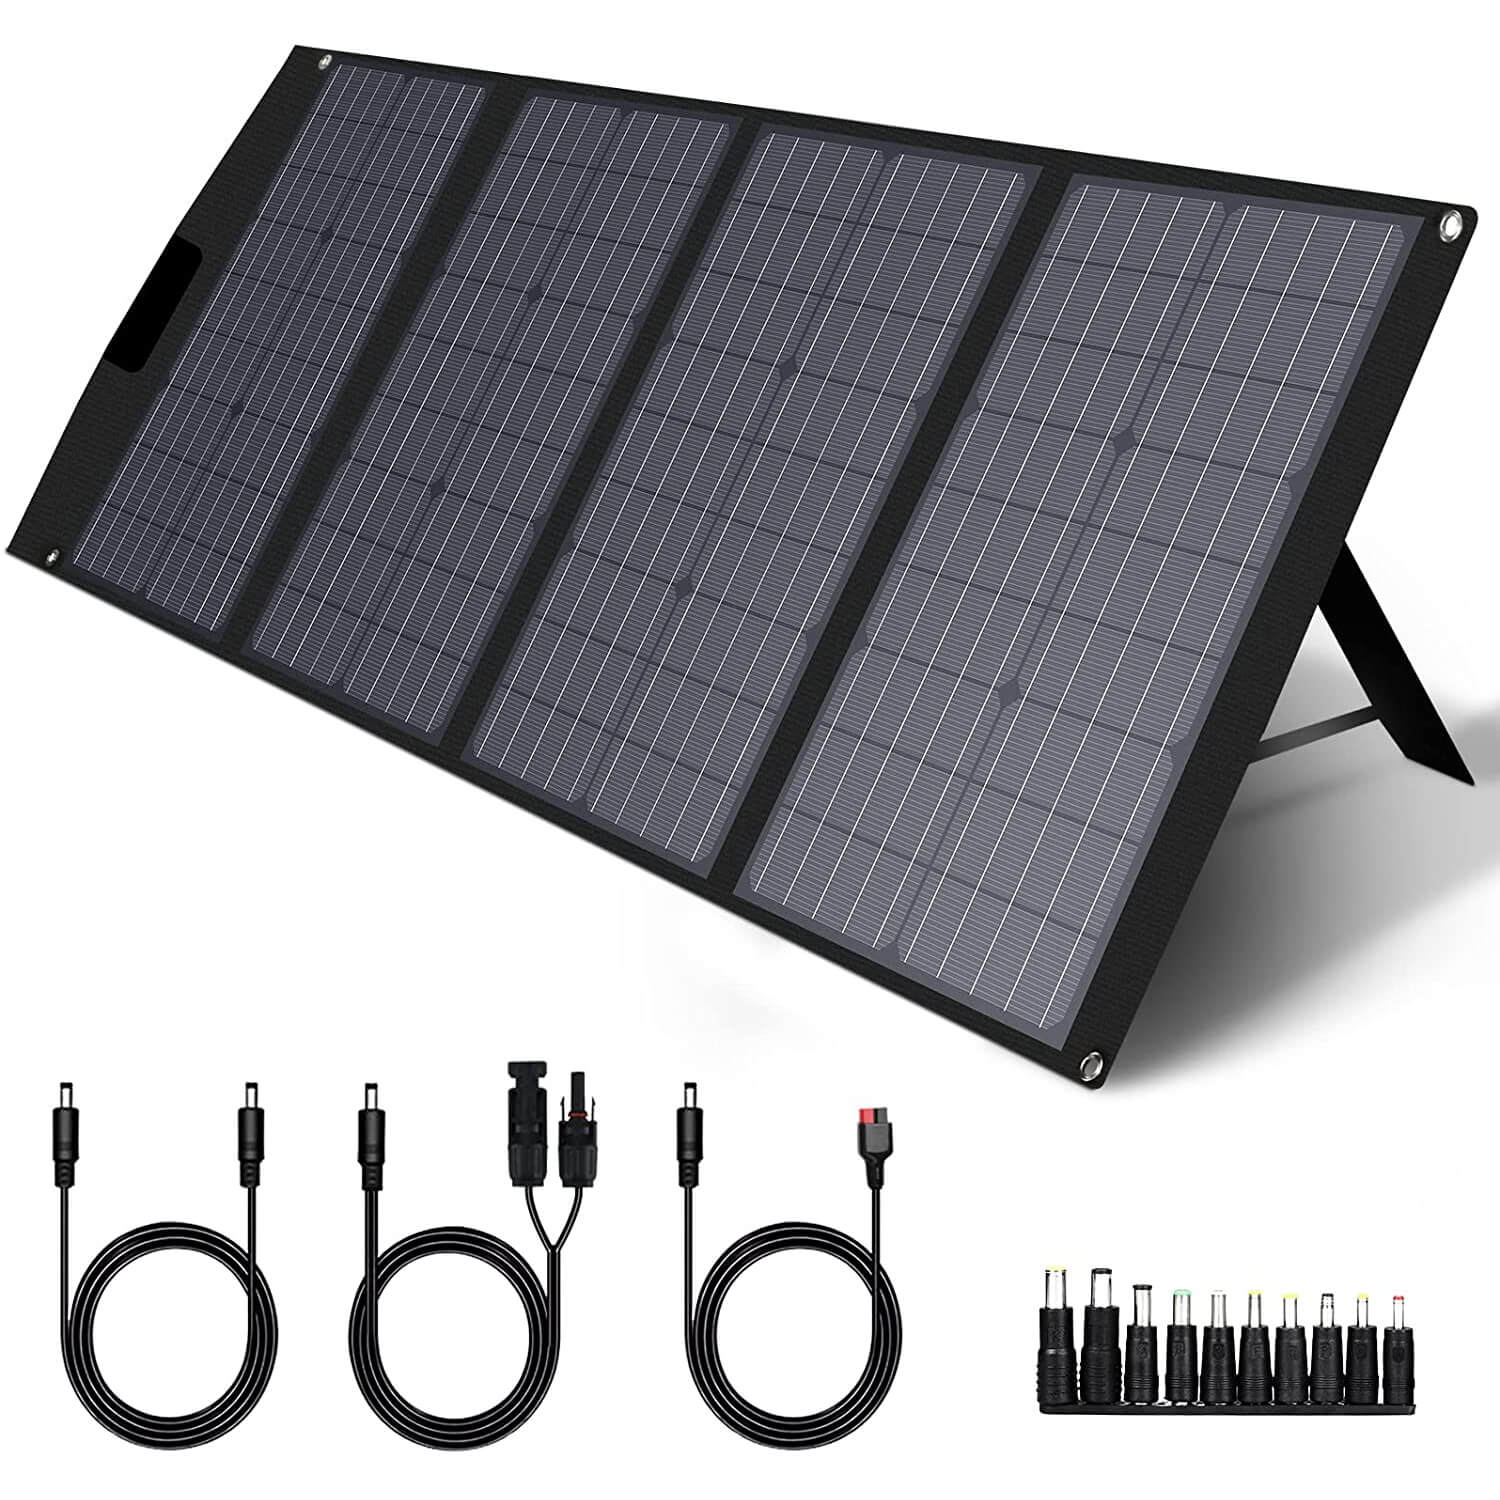 TWELSEAVAN Portable Solar Panel for Power Station